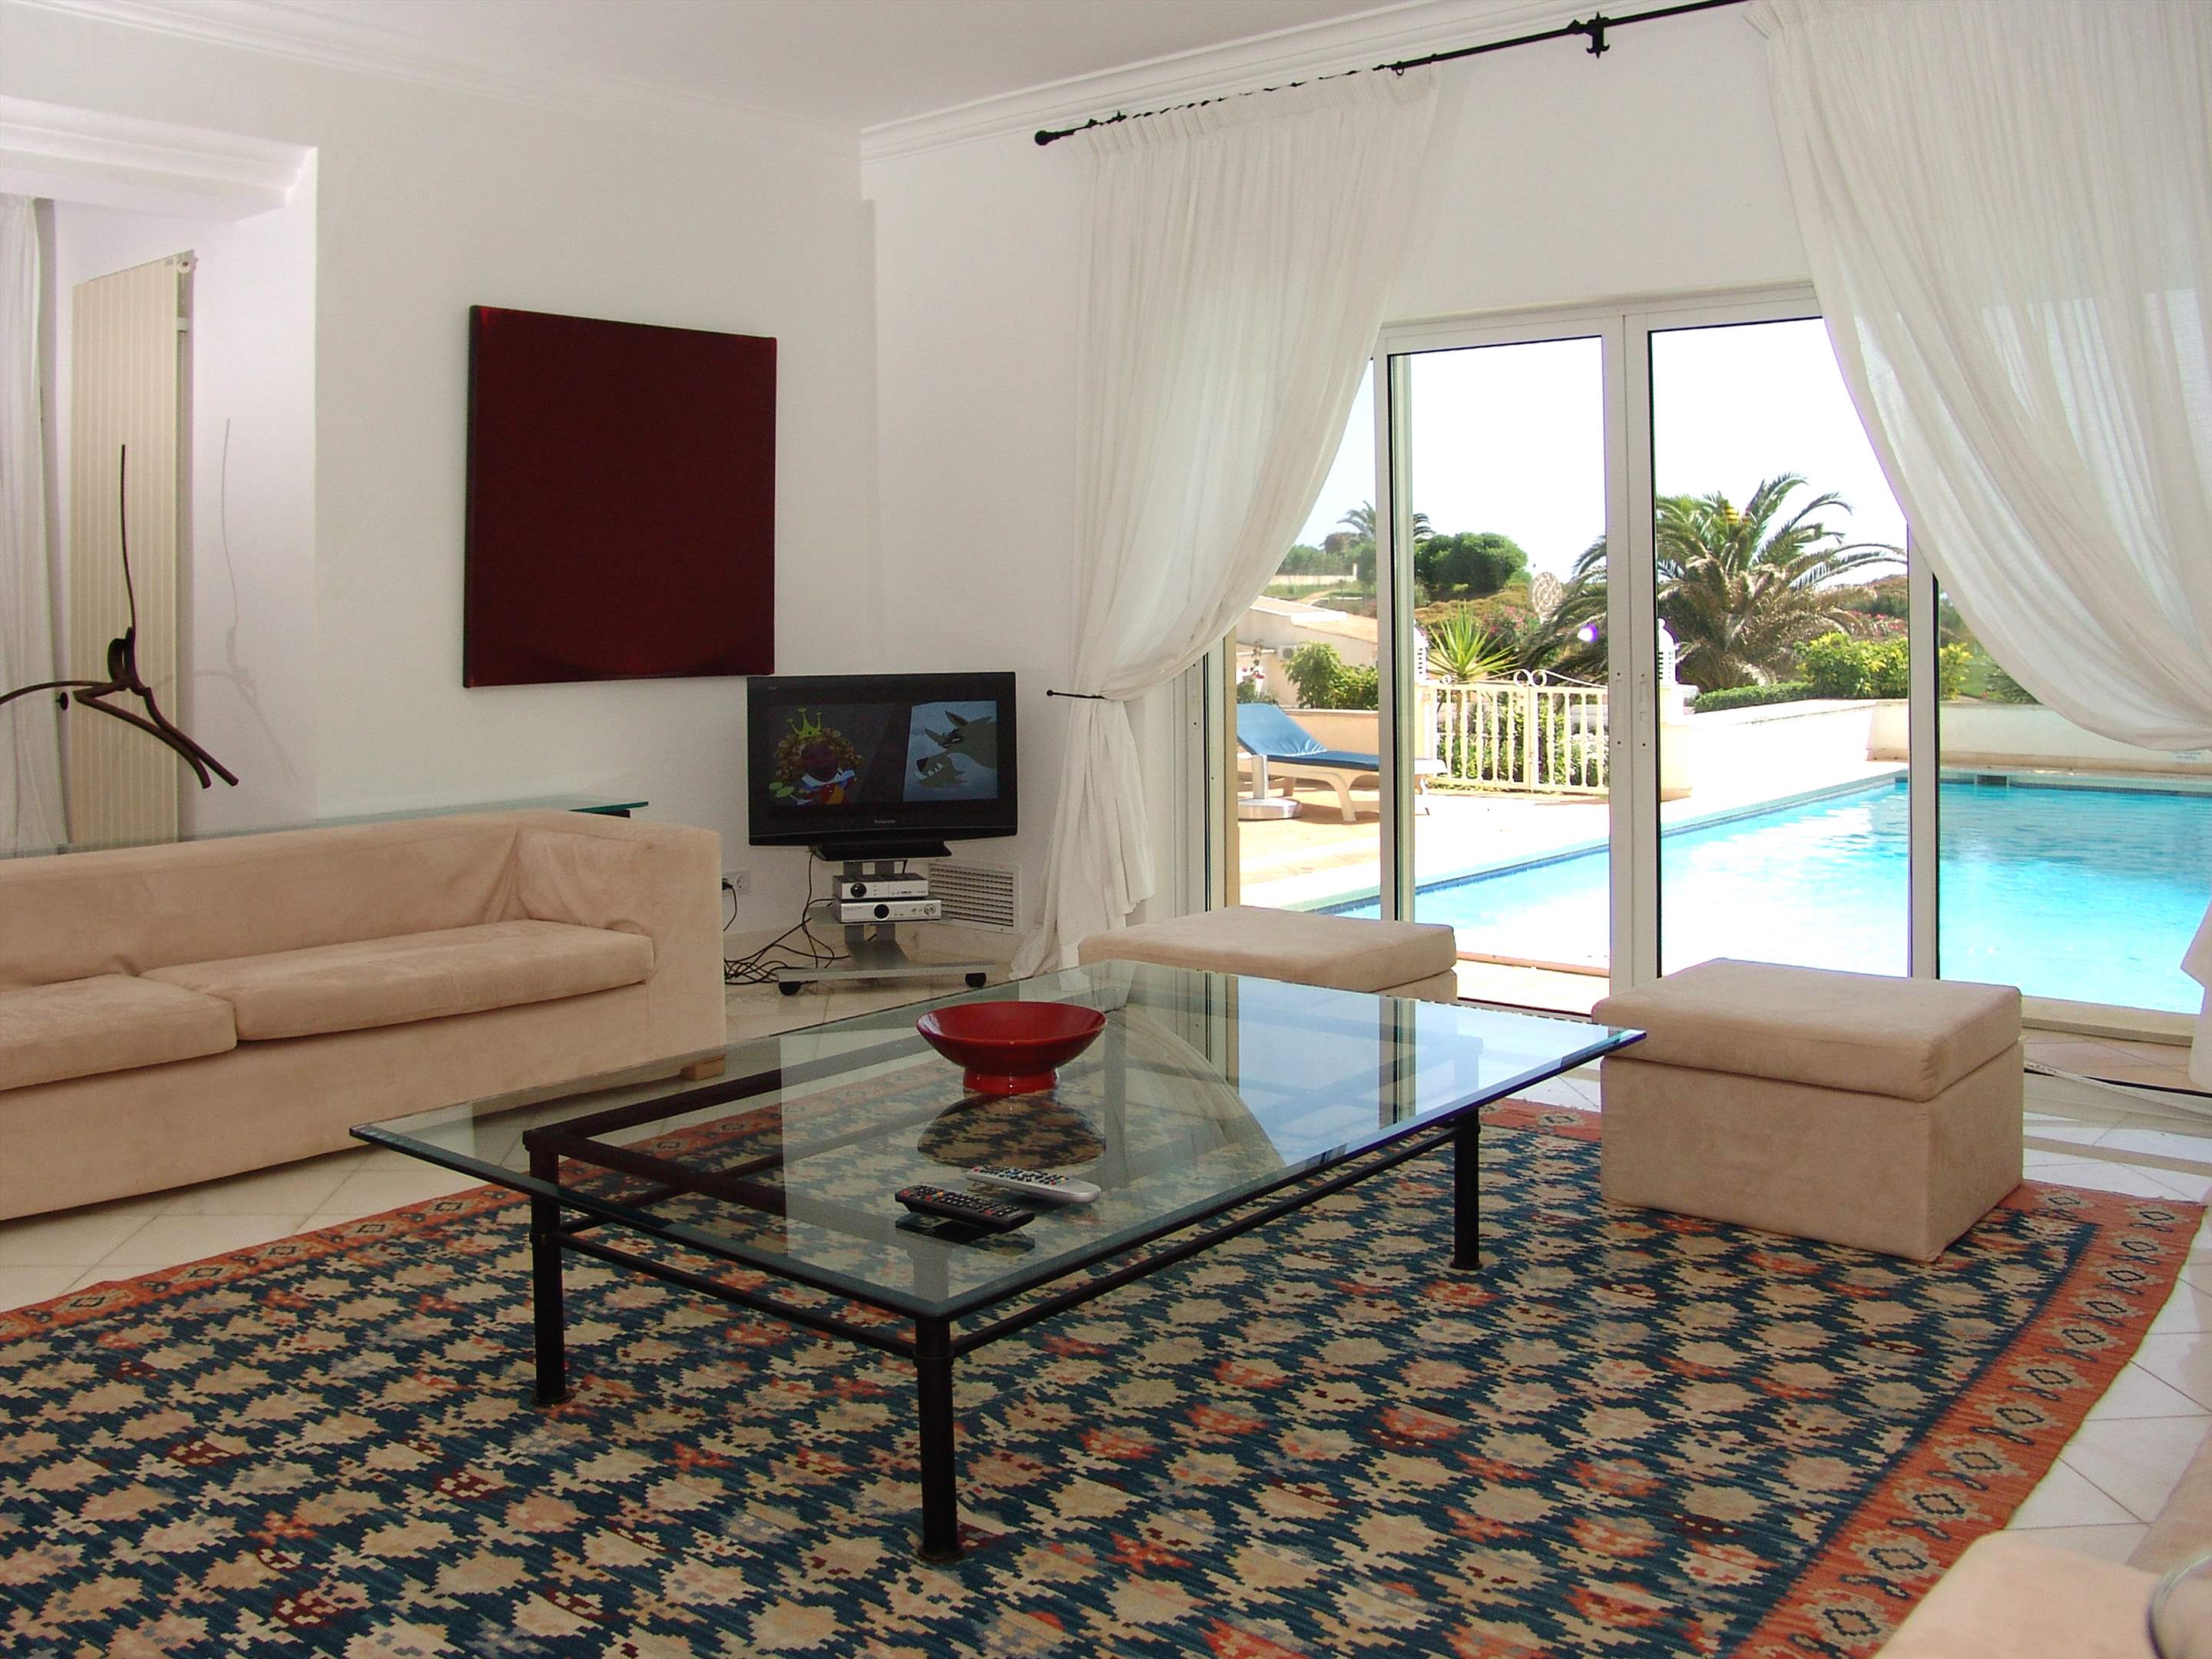 Villas Louisa, 4 Bedroom, 4 bedroom villa in Vale do Lobo, Algarve Photo #11